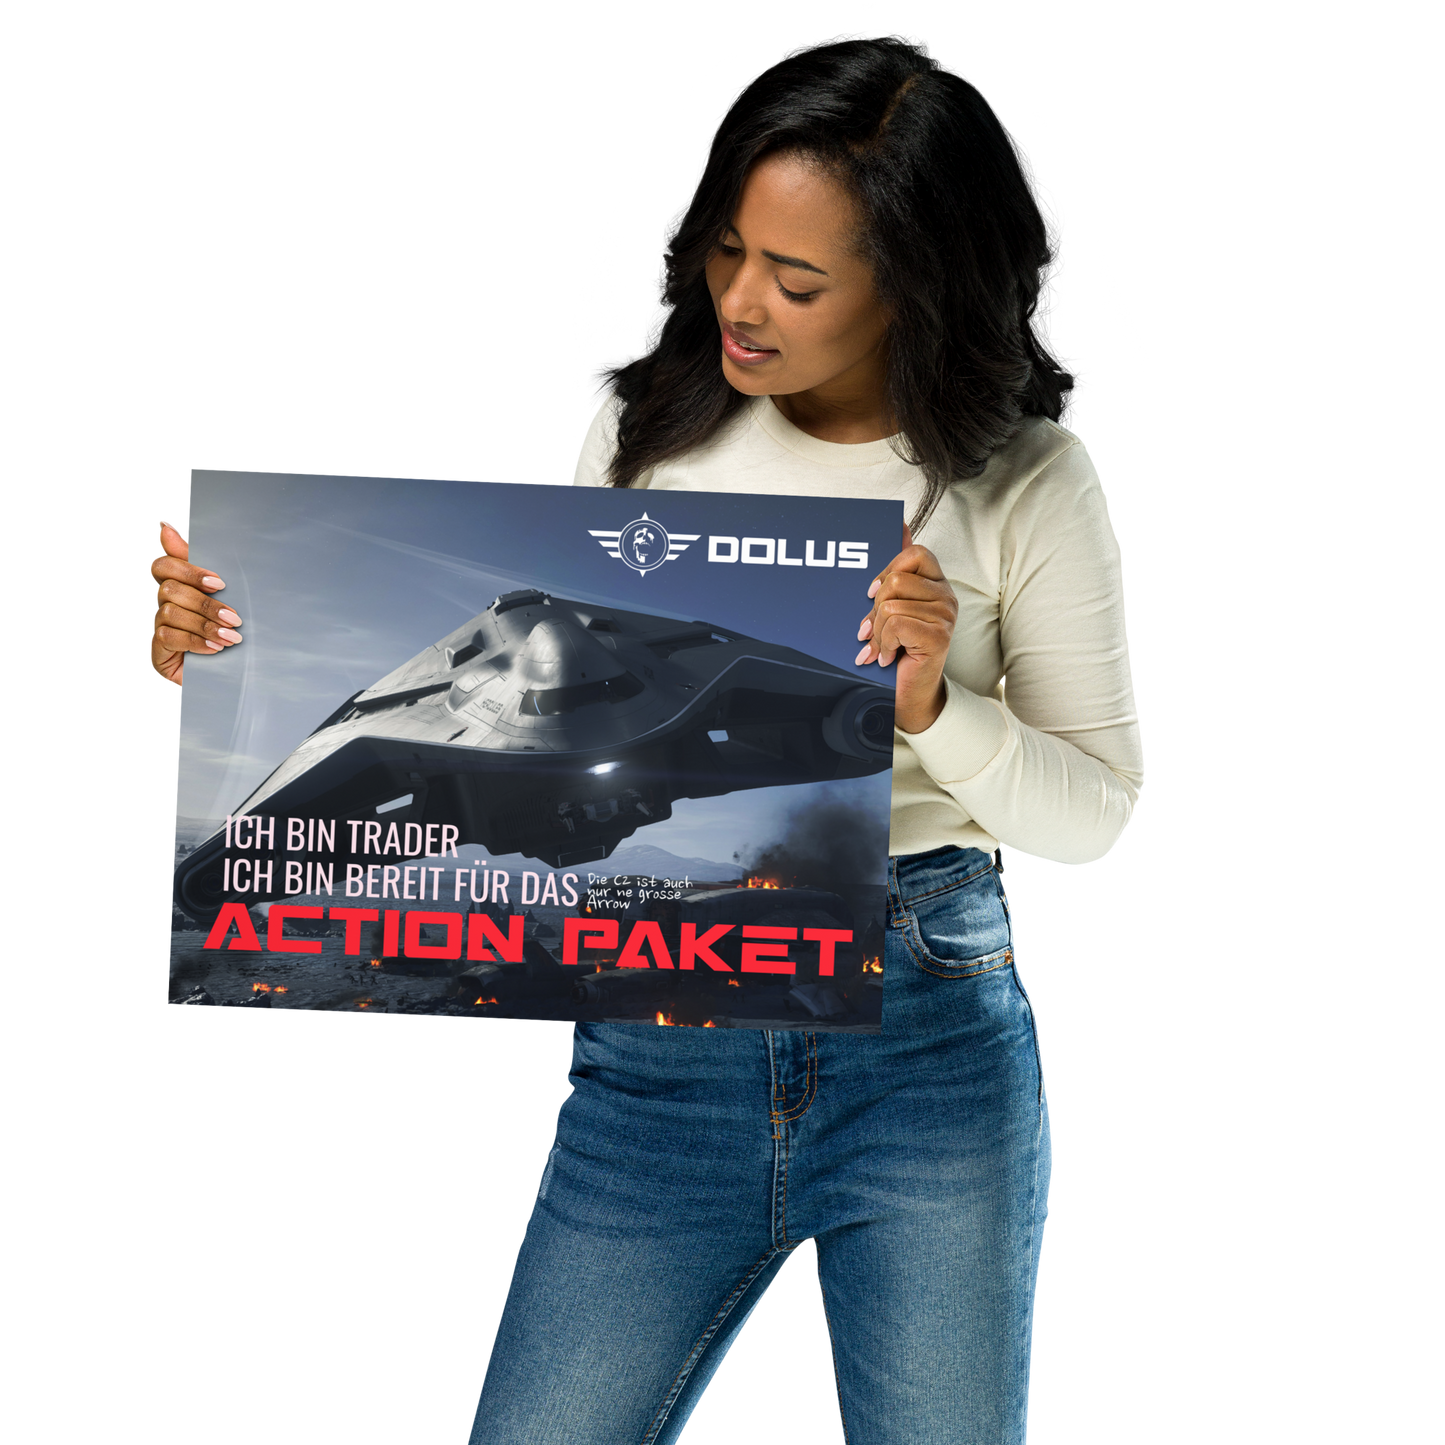 DOLUS Action-Paket Poster - 30x40cm